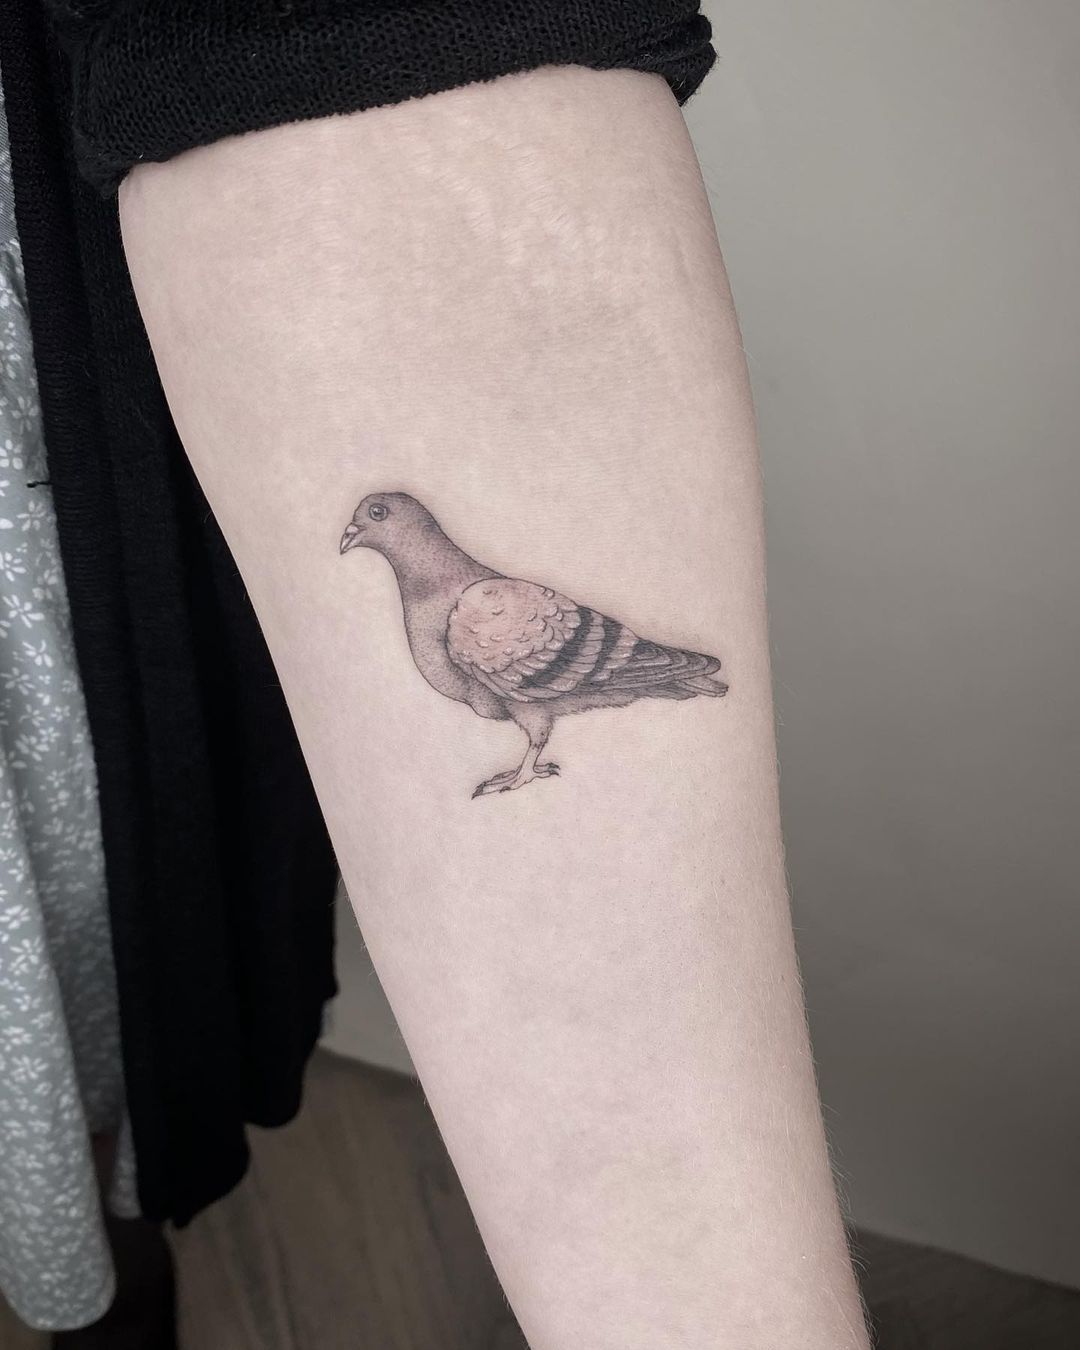 jordancampbellart:pigeon-pigeon -bird-dove-wings-black-and-grey-fine-line-single-needle-realistic-illustrative-portrait-nature-memorial-arm-half-sleeve-in-progress